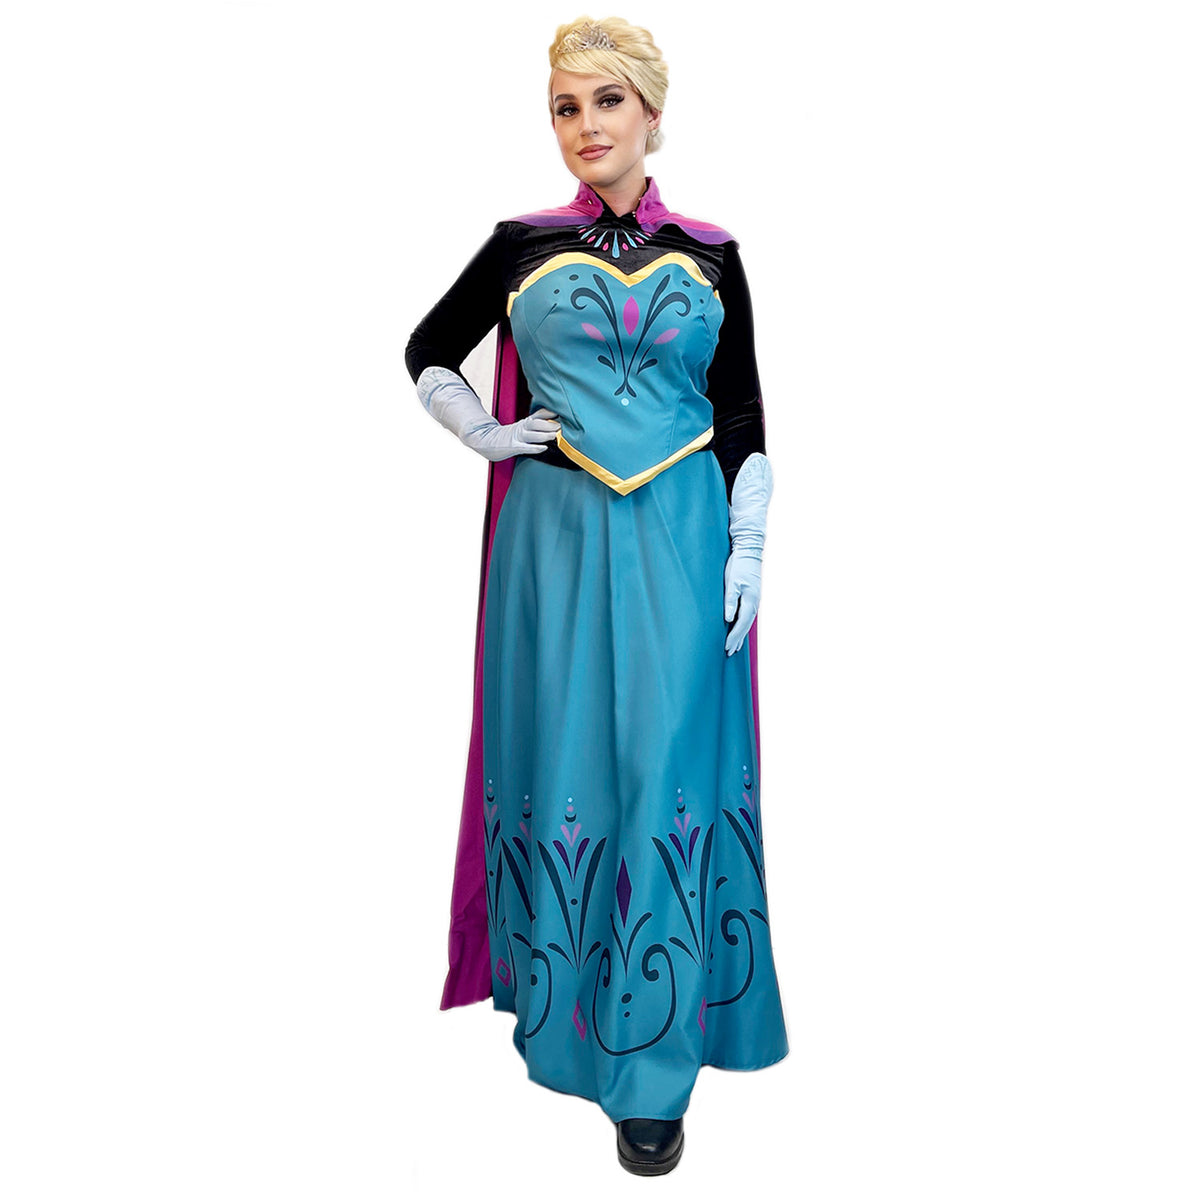 Frozen Princess Coronation Dress Adult Costume